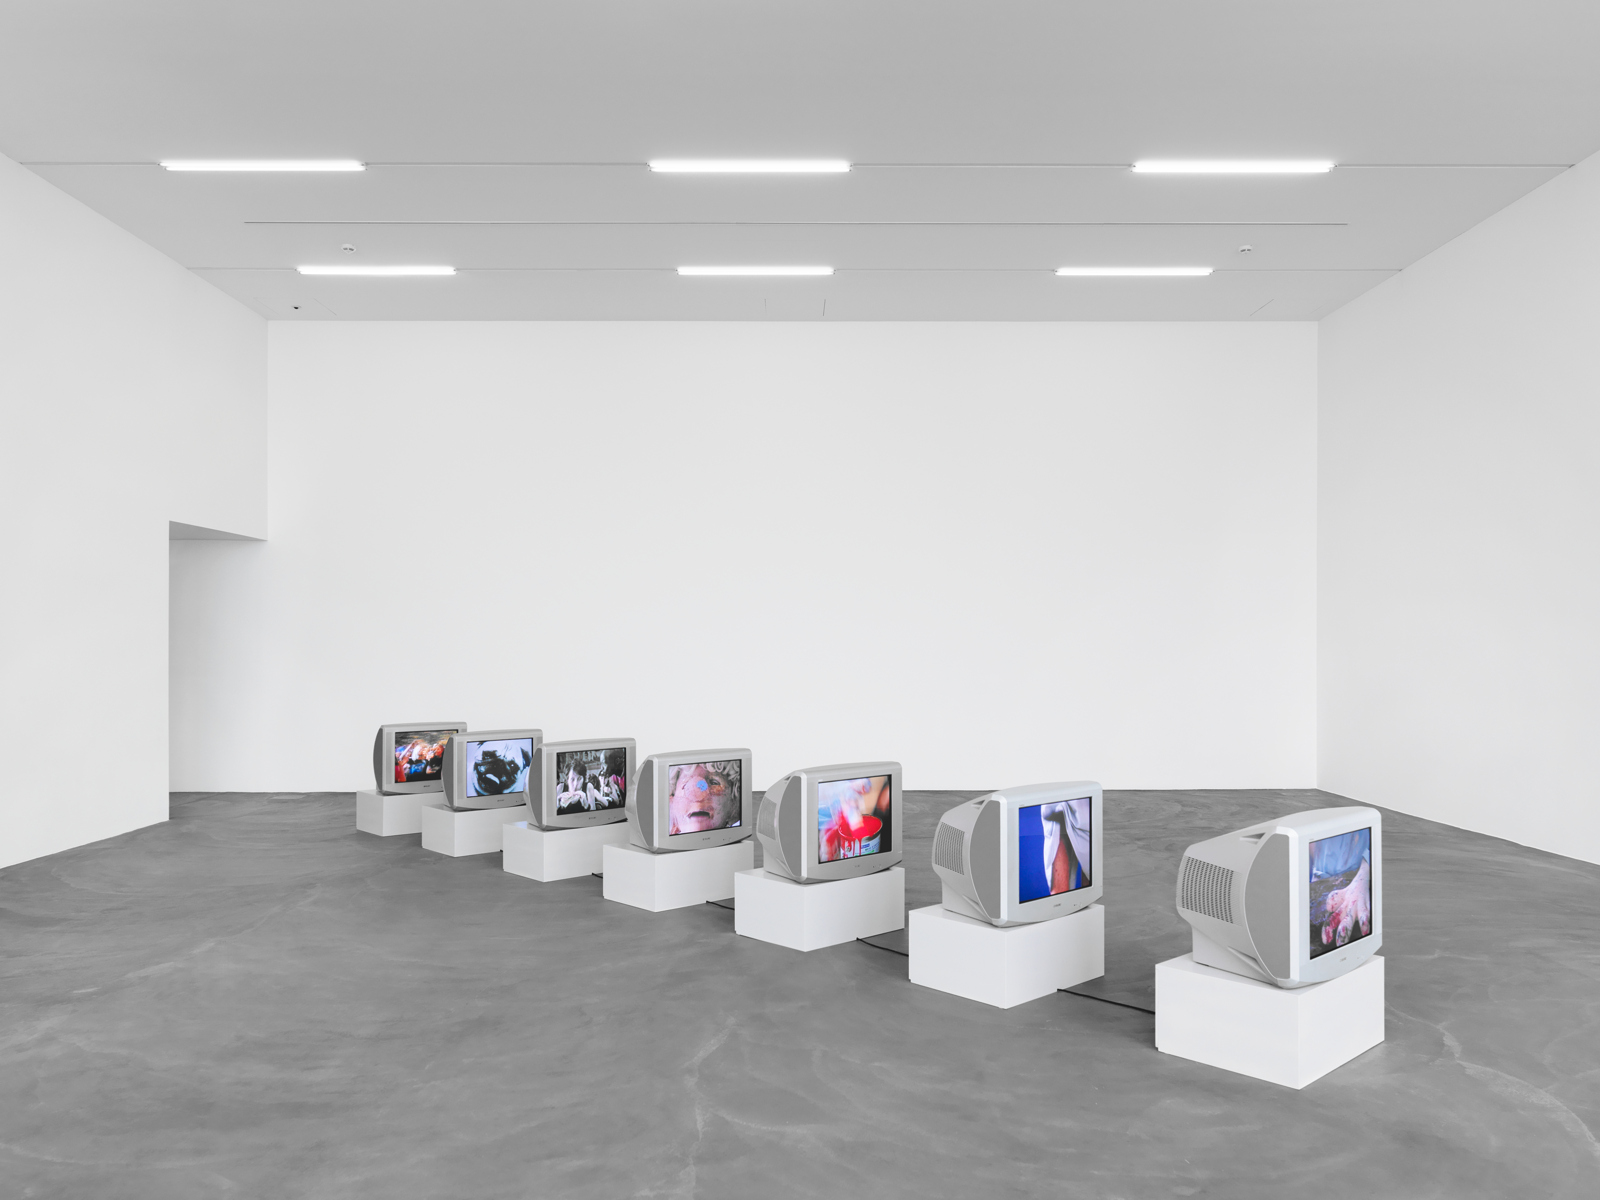 Sturtevant / "Image Over Image", exhibition view, Kunsthalle Zürich / 2012